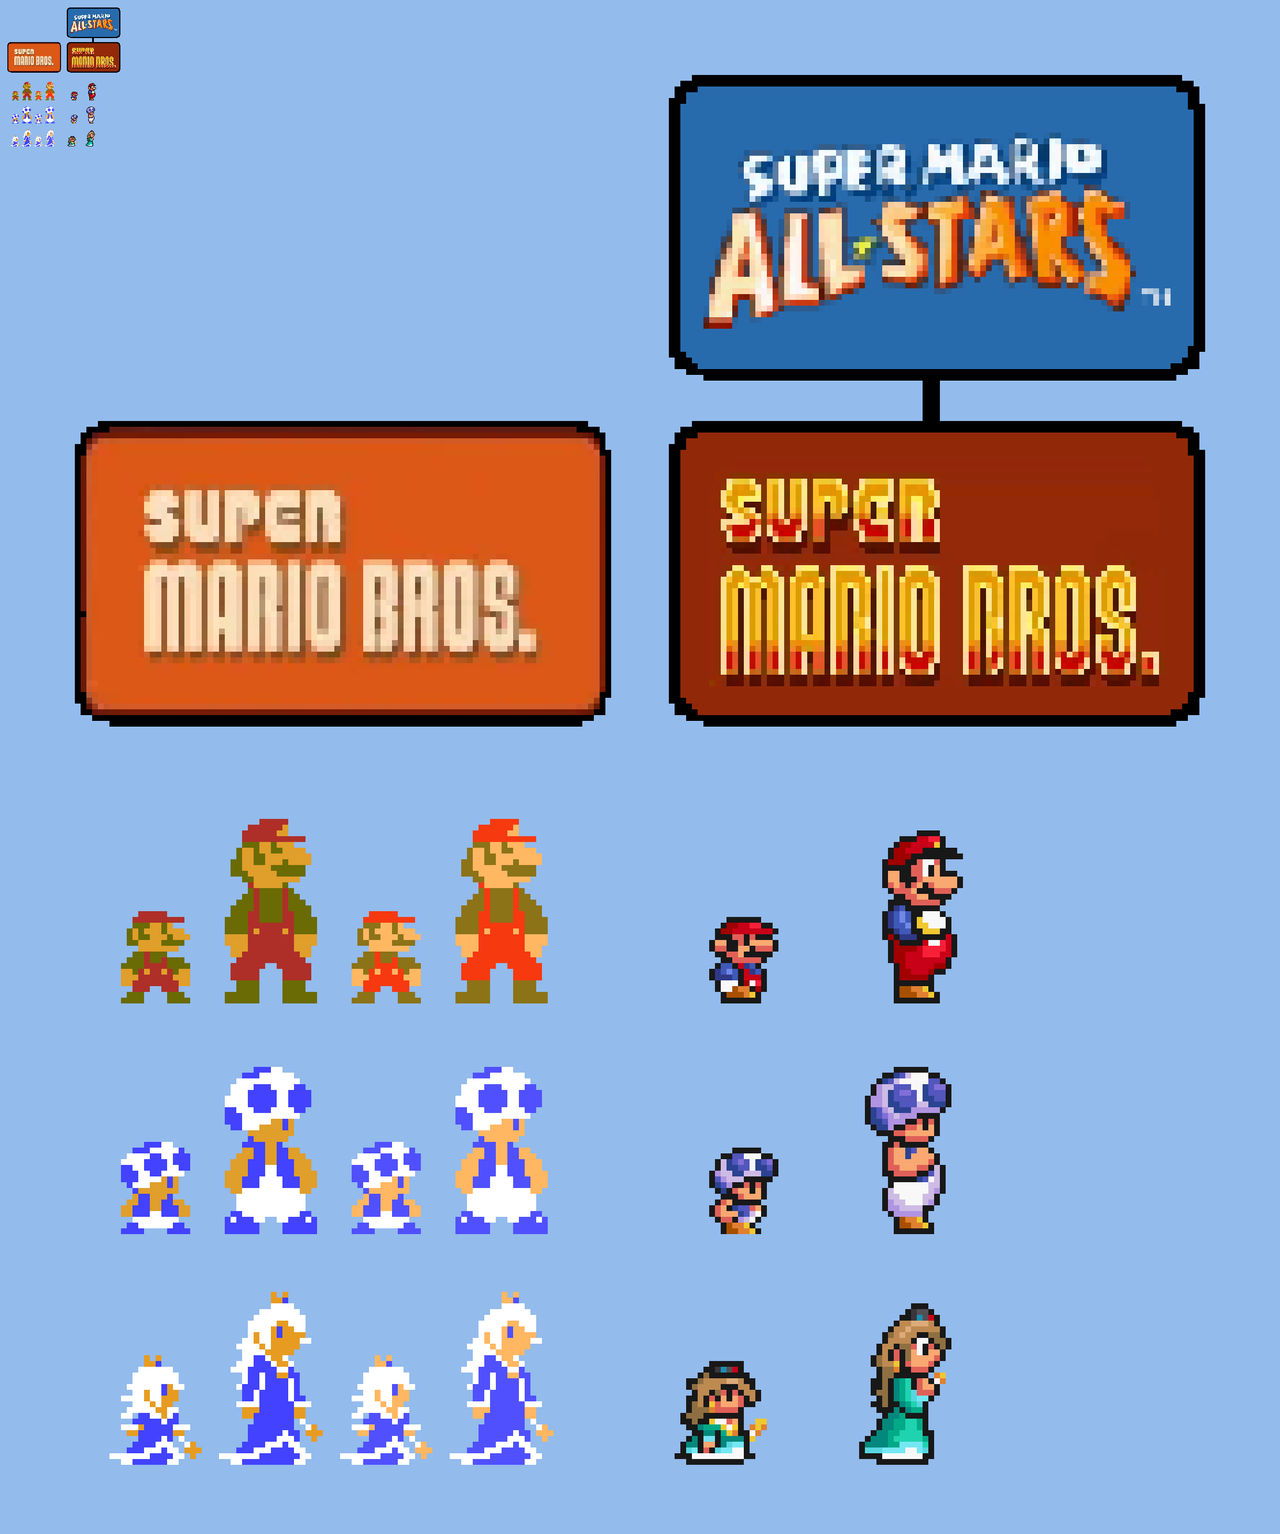 10x Rosalina Super Mario Bros 1 NES-Style Conversi by Abbysek on DeviantArt